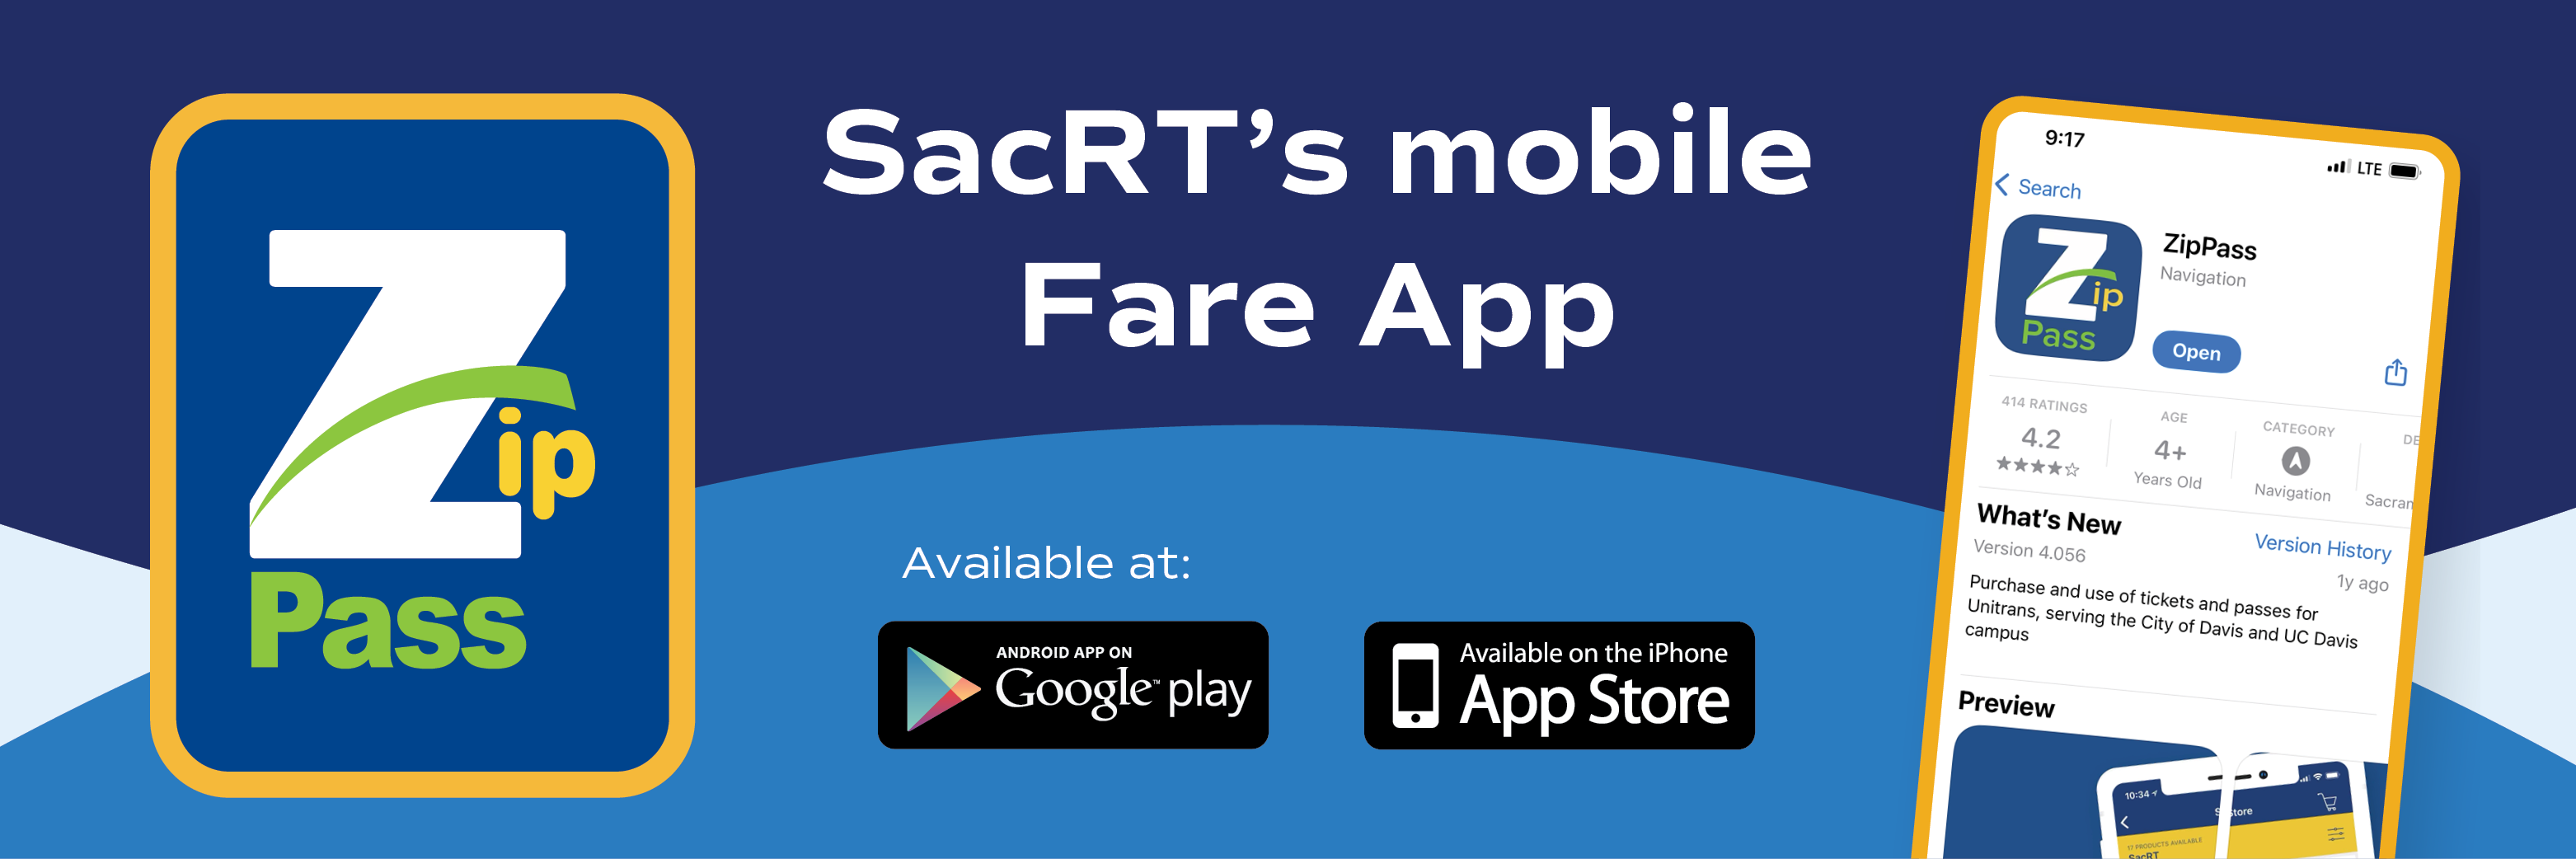 SacRT's Mobile Fare App